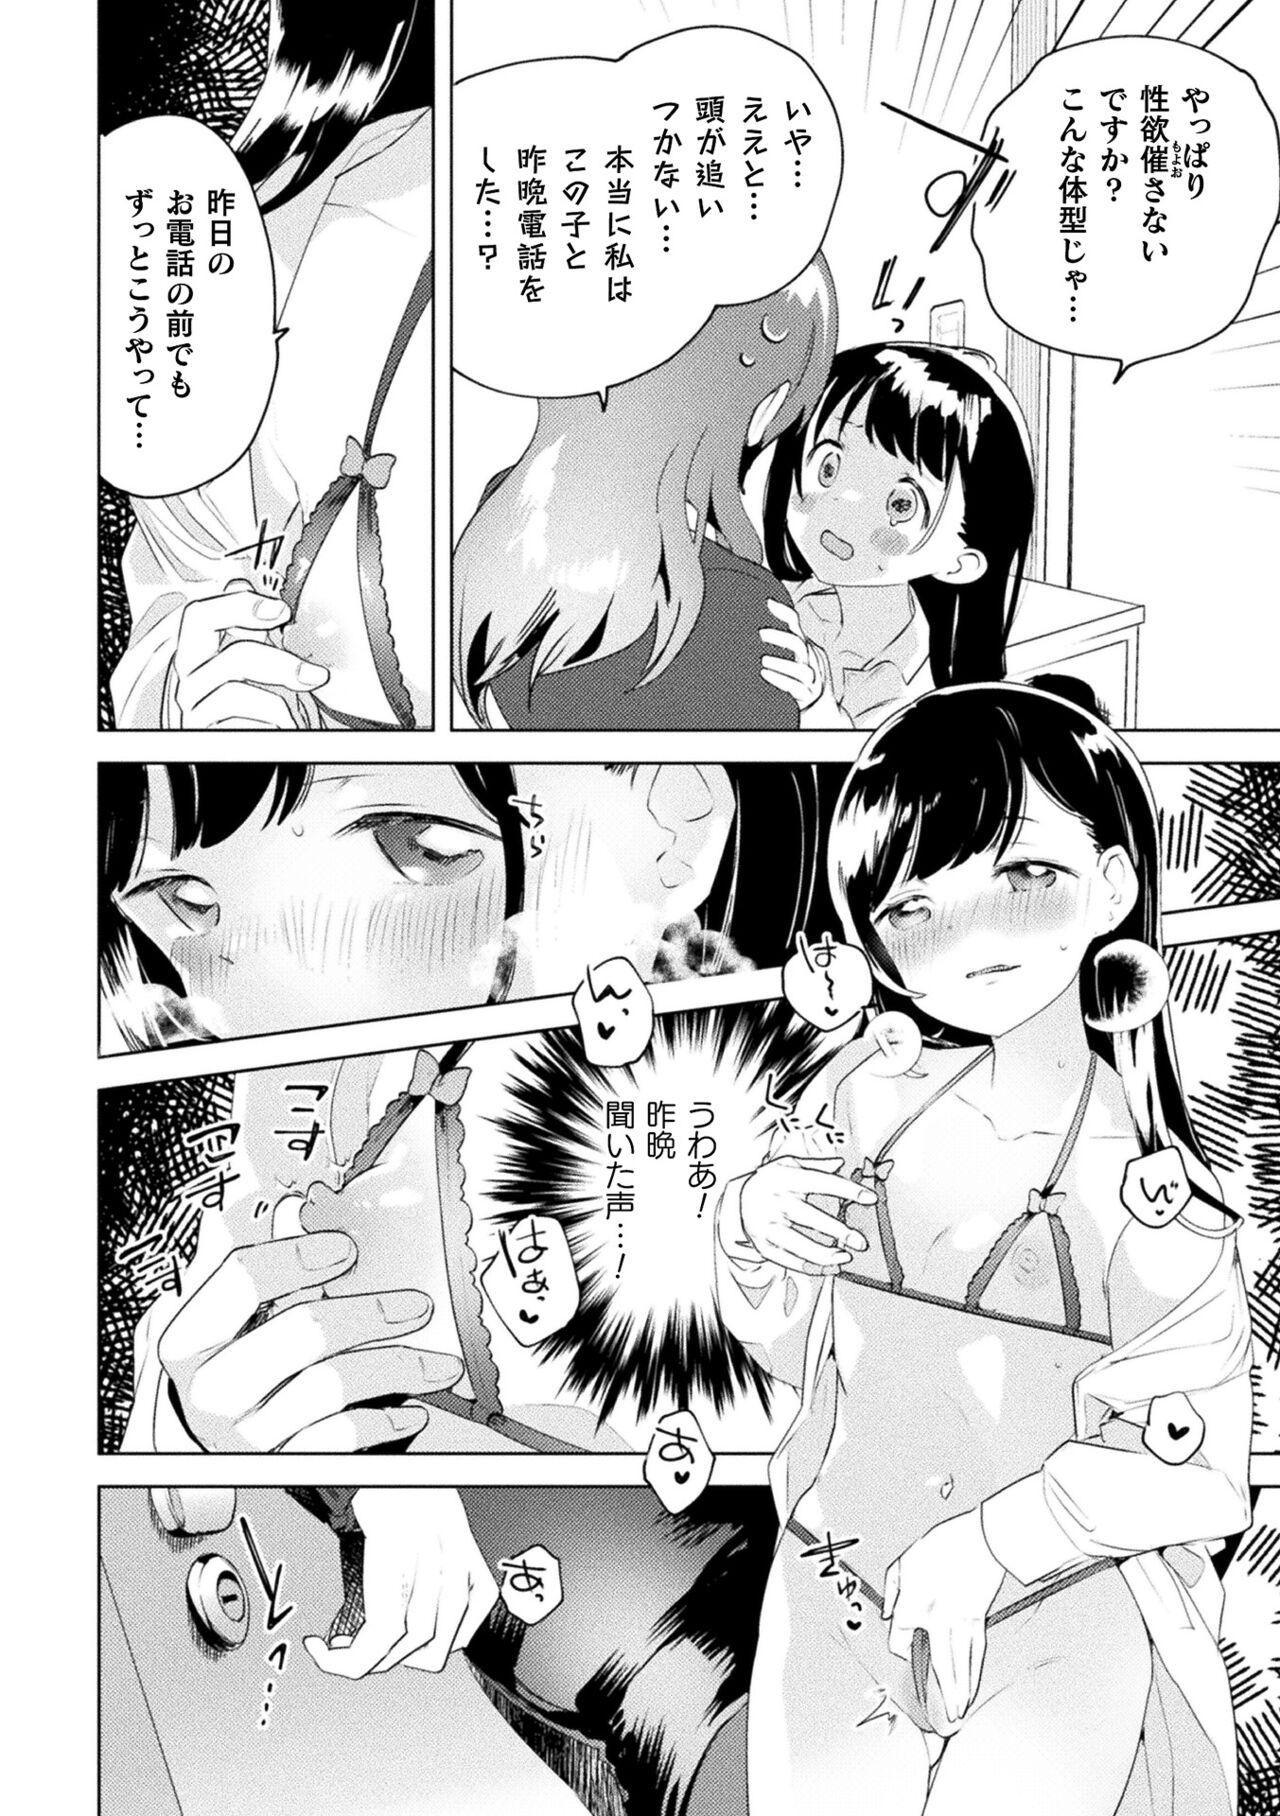 Free Blowjobs 2D Comic Magazine Mamakatsu Yuri Ecchi Vol. 3 3some - Page 10